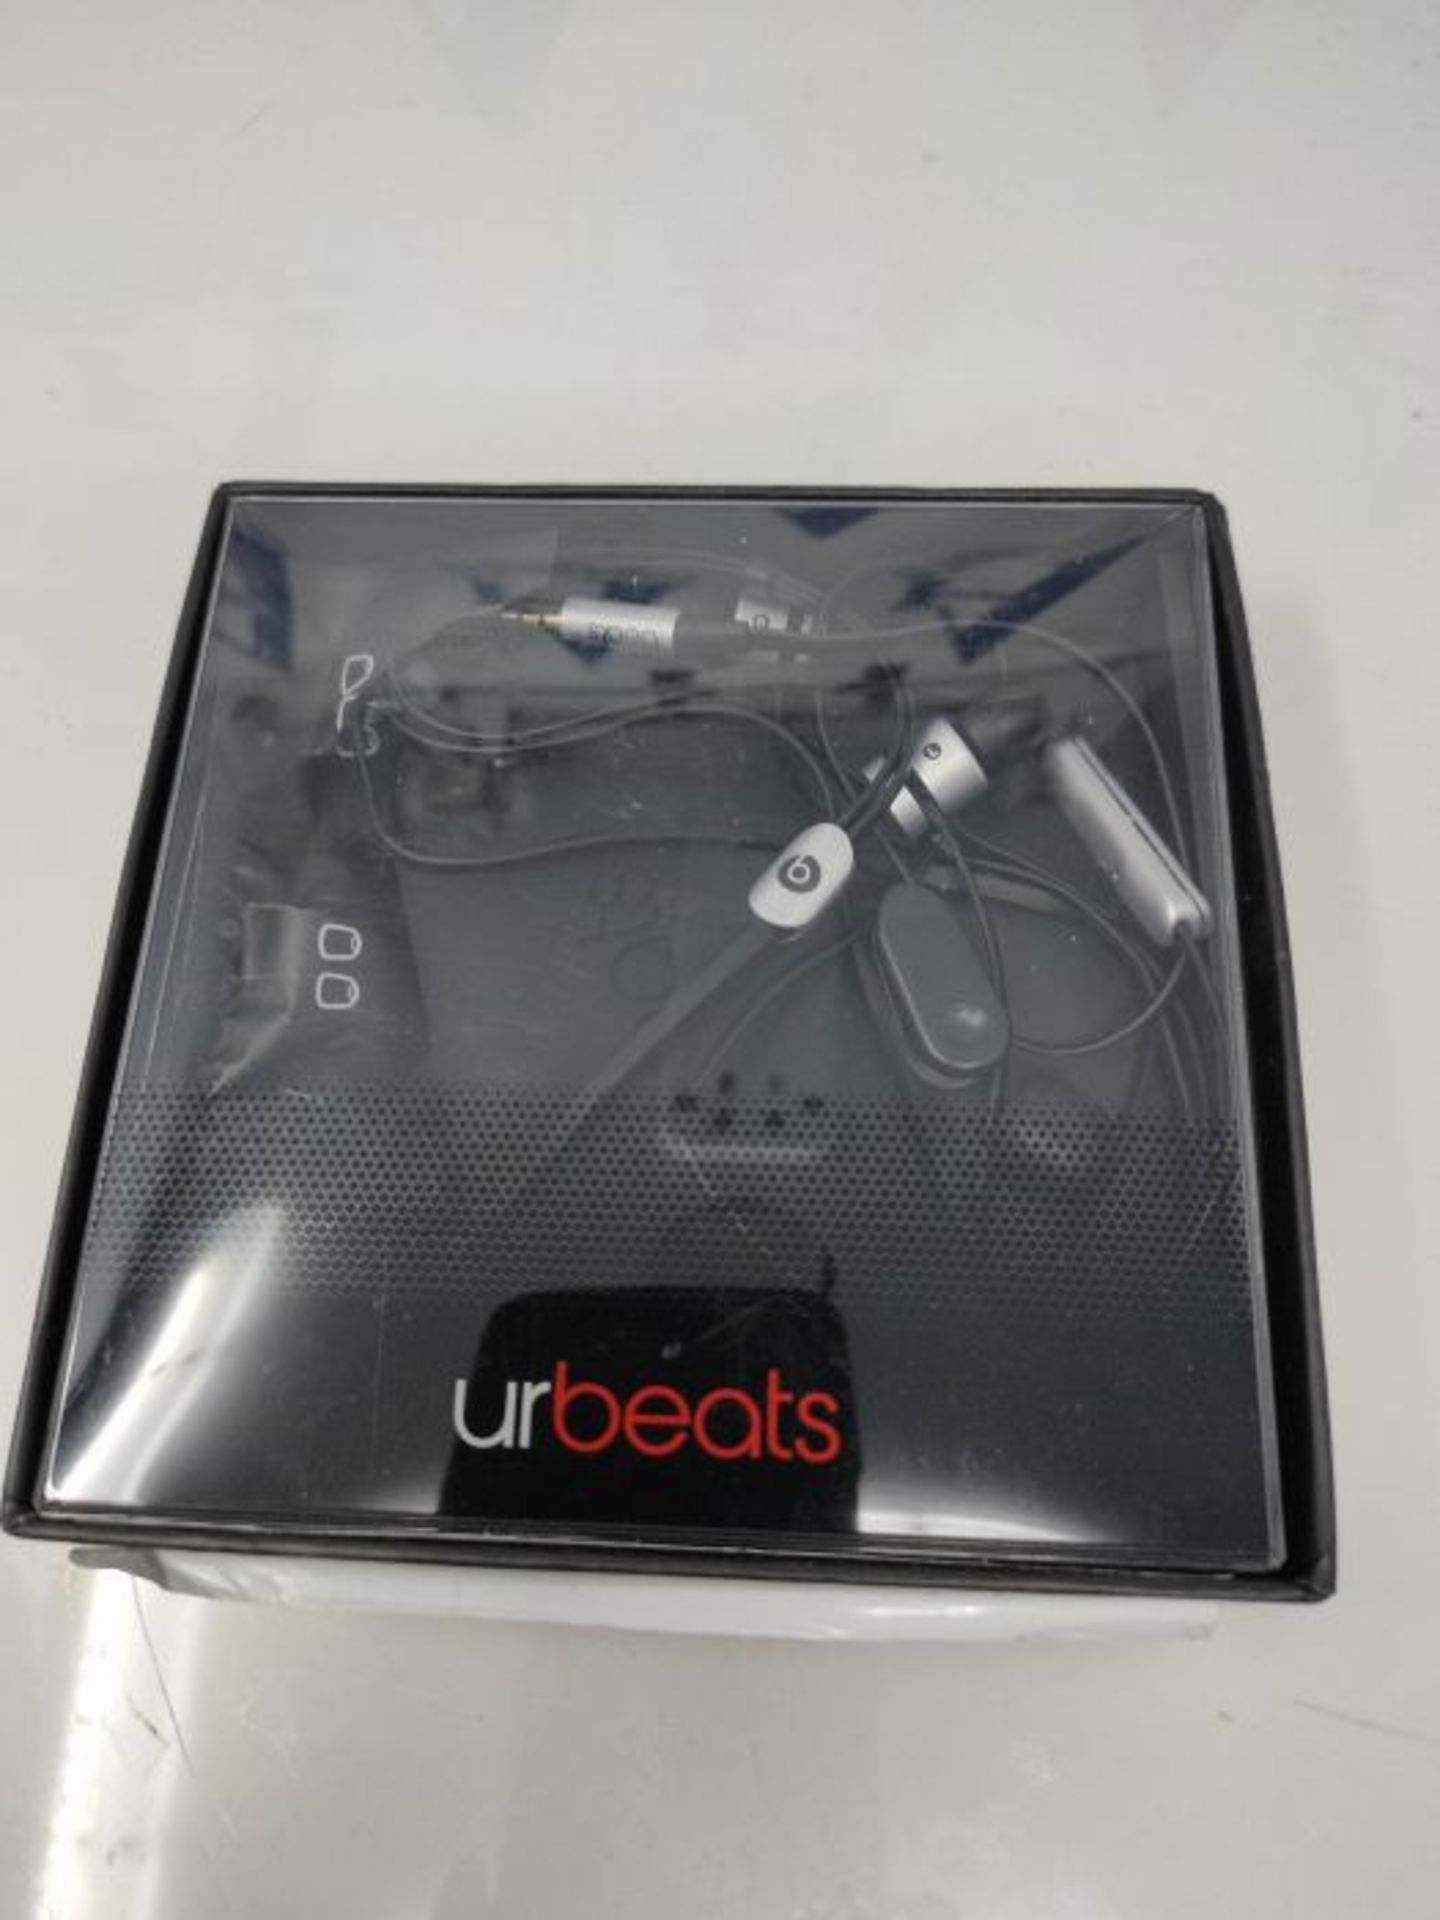 RRP £99.00 Beats by Dr. Dre UrBeats In-Ear Headphones - Space Grey